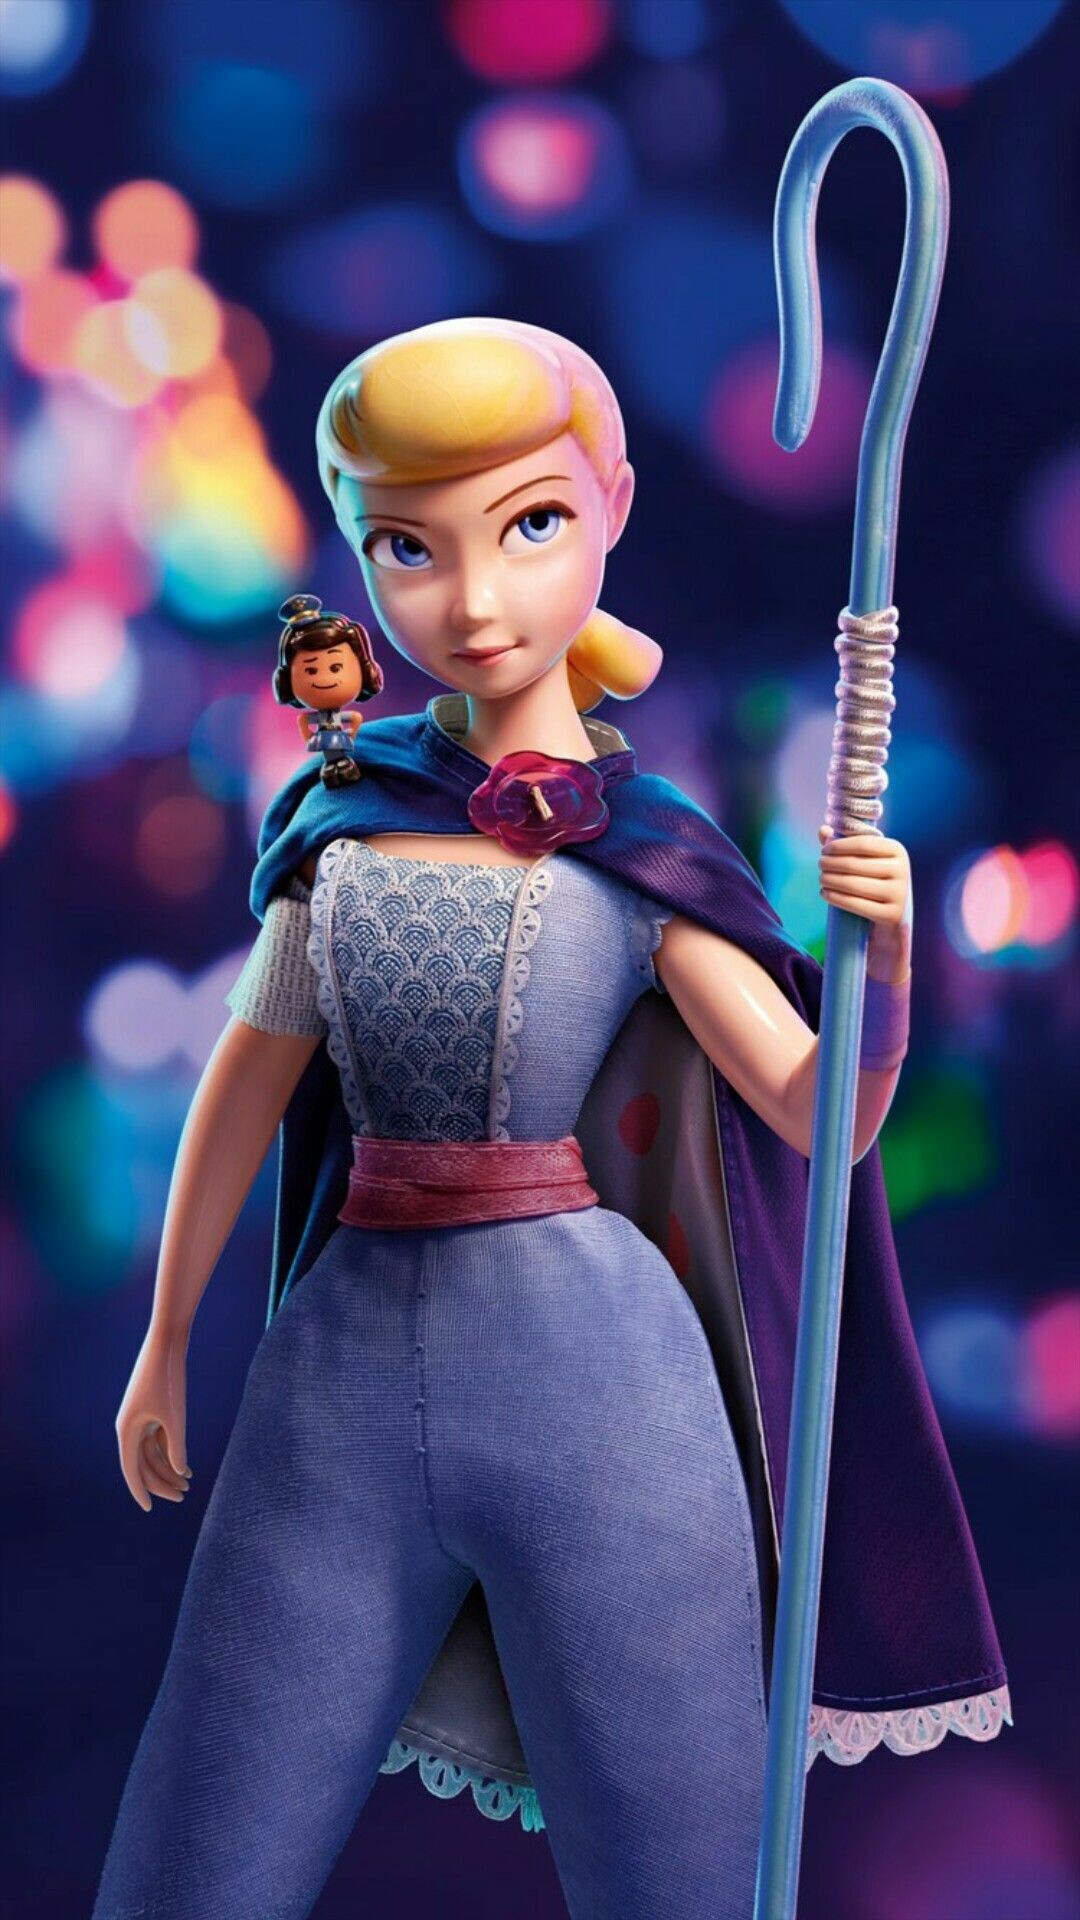 Toy Story: Disney, Bo Peep, a porcelain shepherdess doll, voiced by Annie Potts. 1080x1920 Full HD Wallpaper.